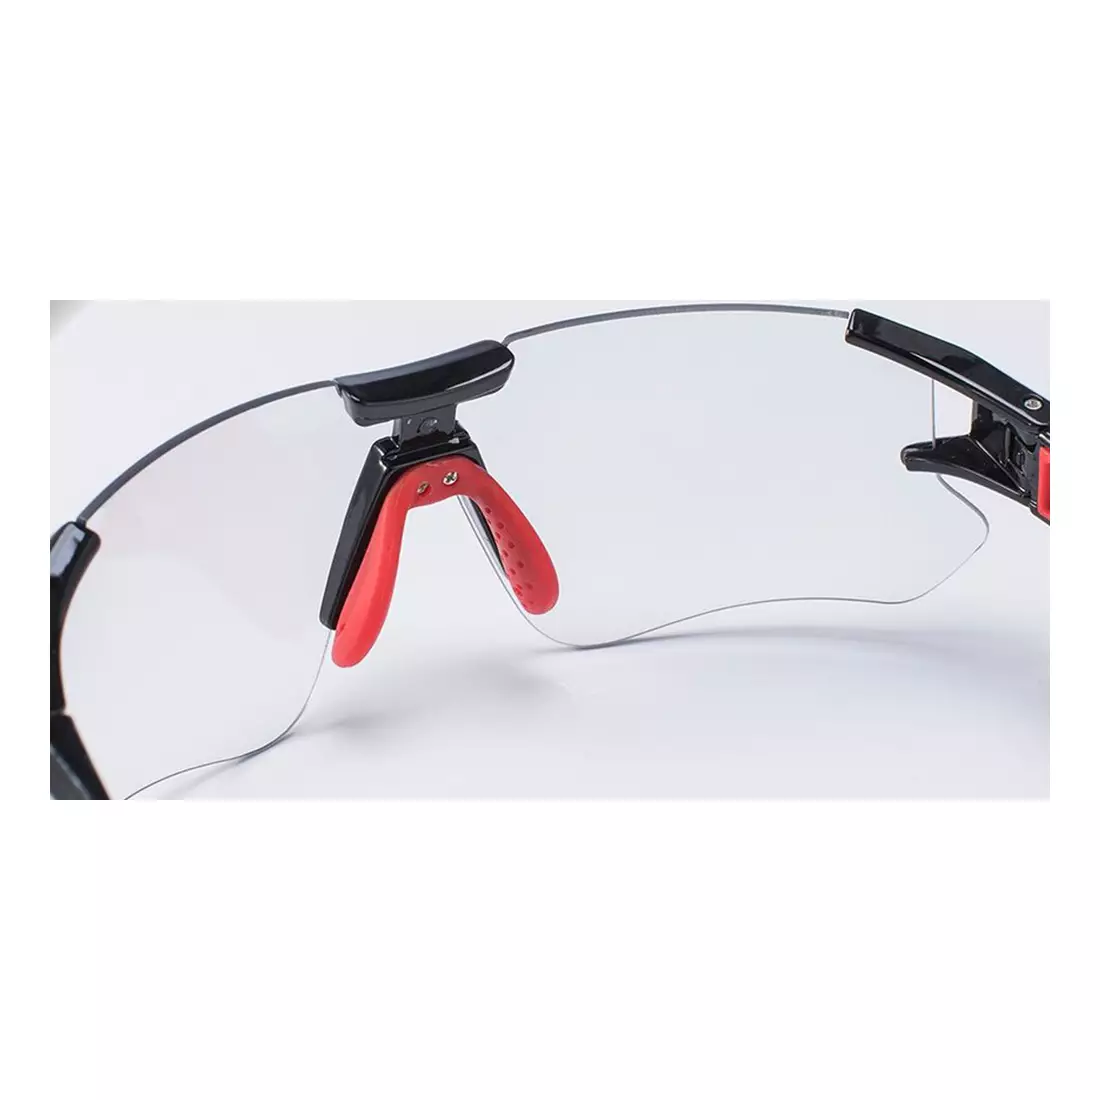 Rockbros 10125 cyklistické brýle / sportovní s černo-červeným fotochromem